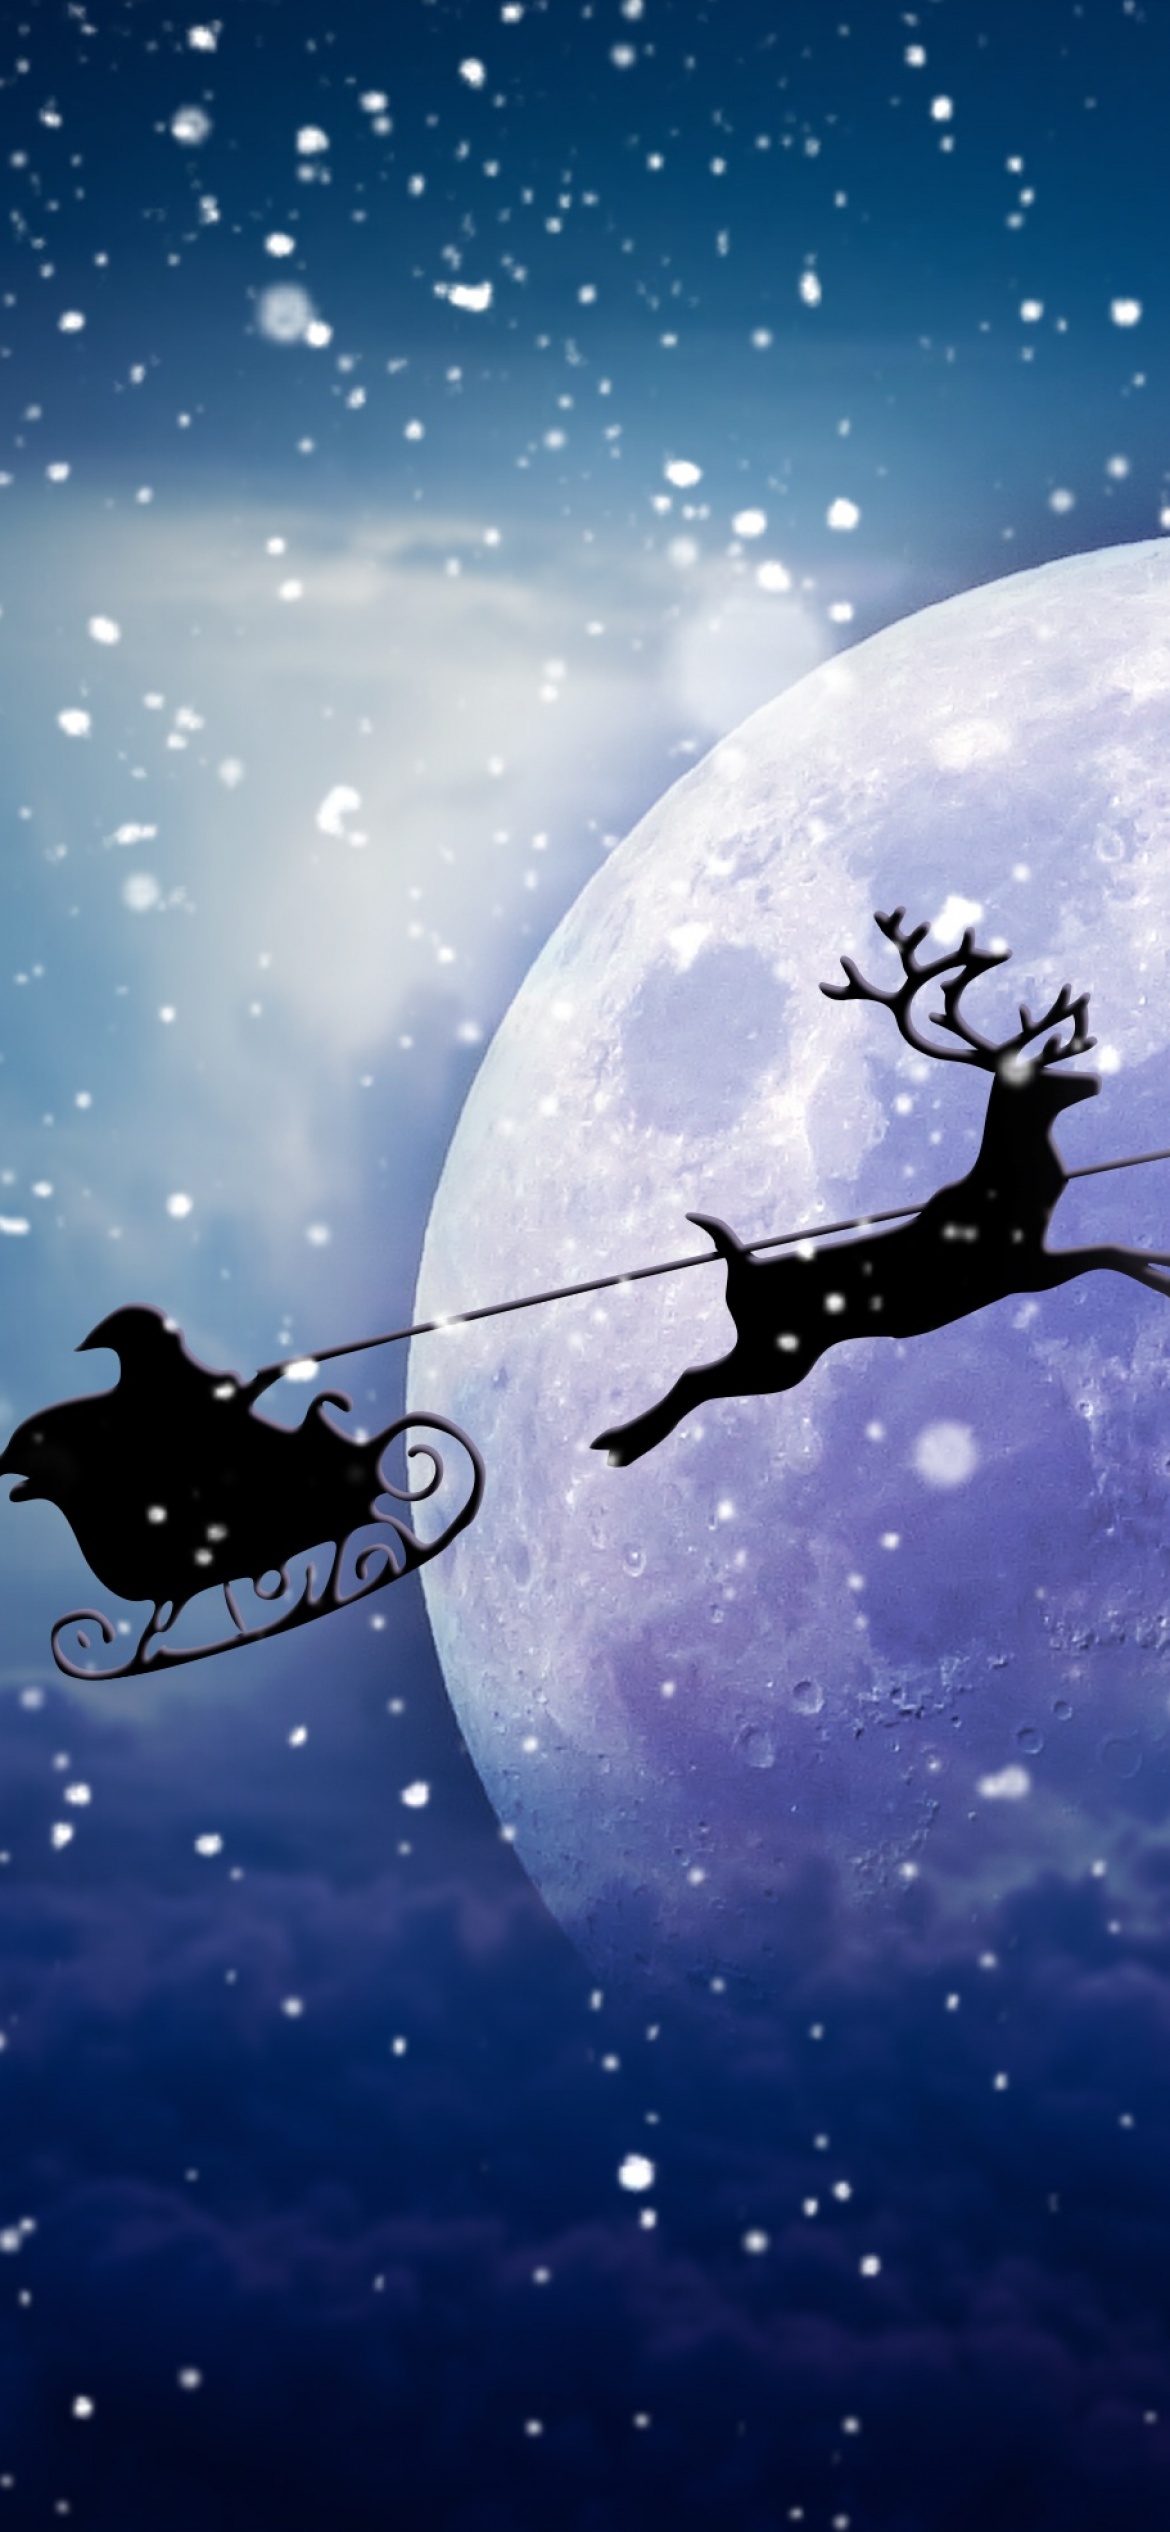 Santa Claus chariot Wallpaper 4K, Moon, Snowfall, Winter, Reindeer